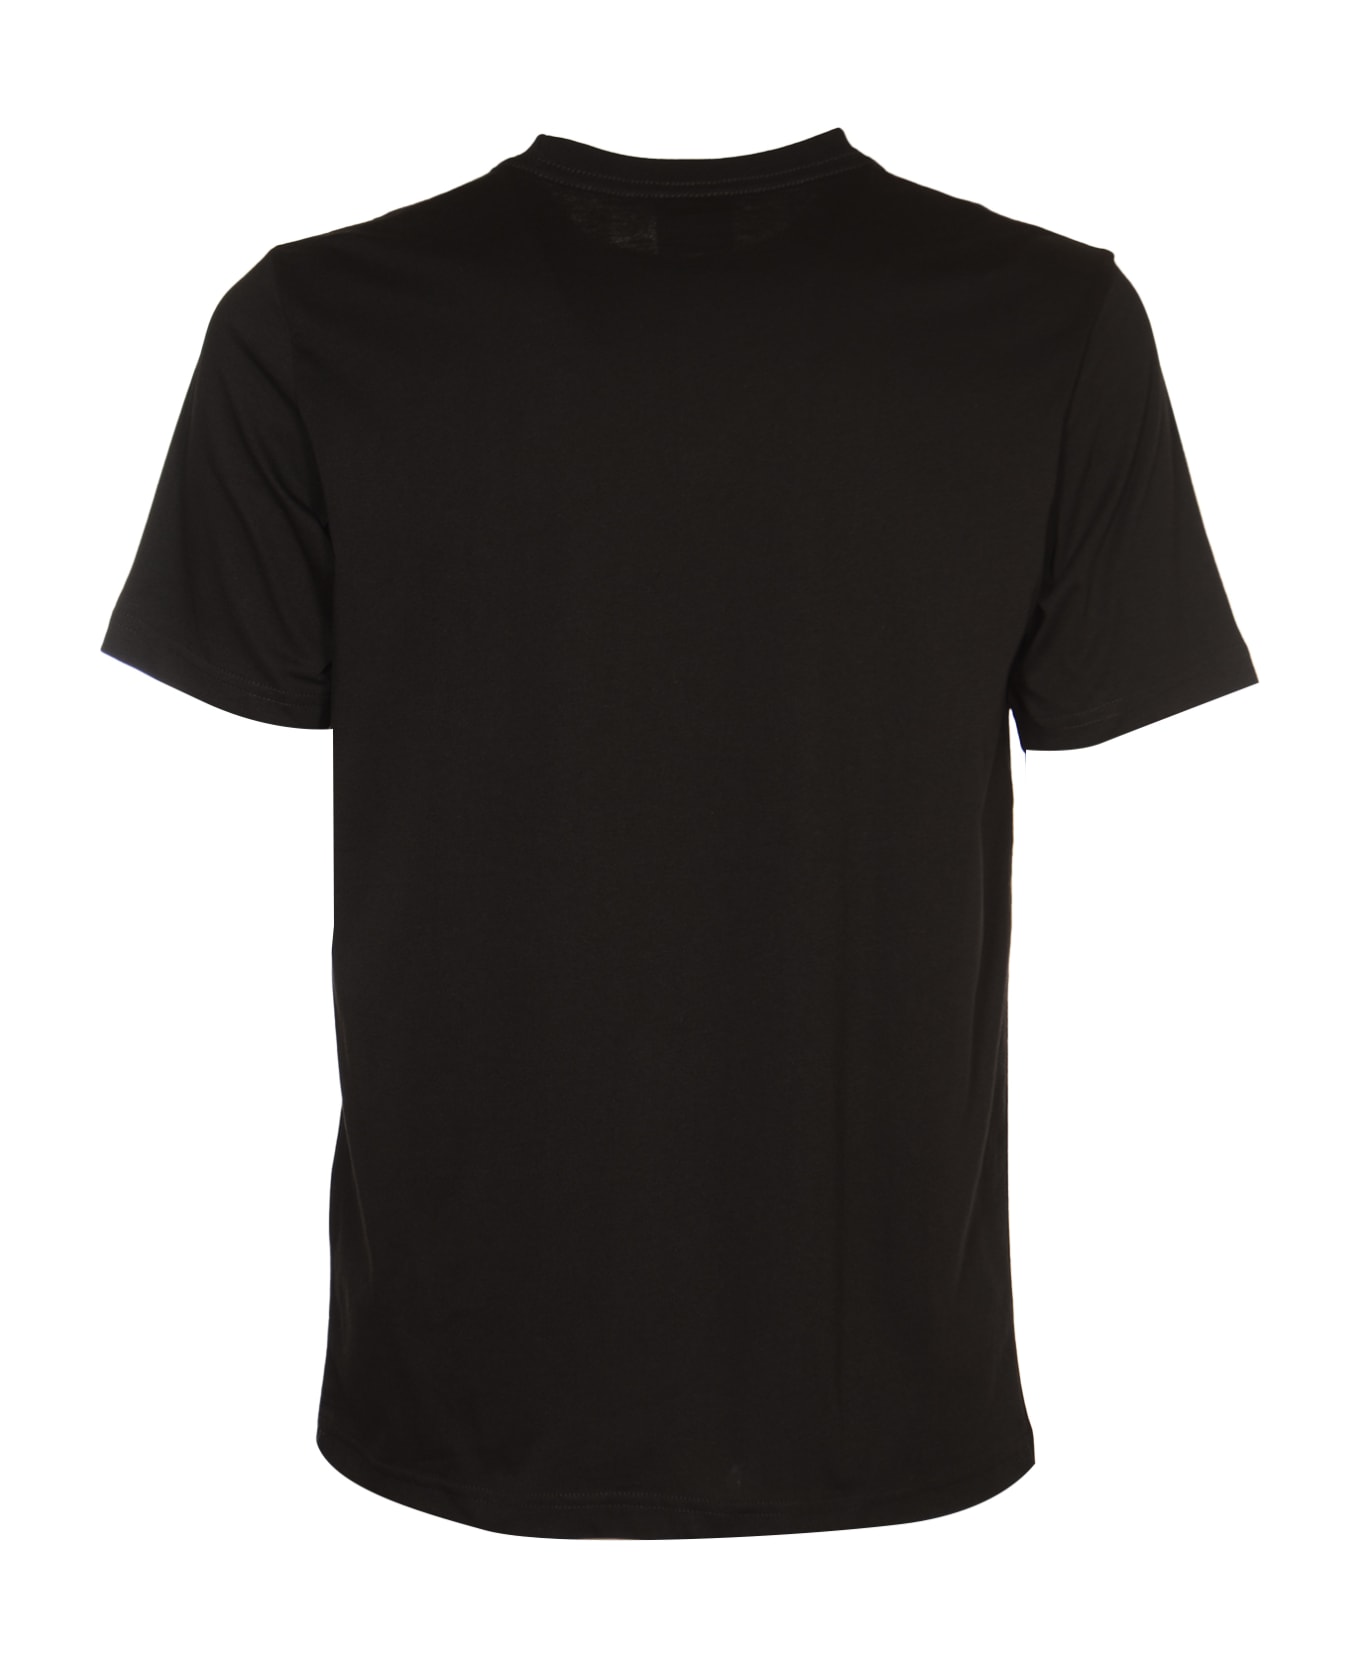 Paul Smith 'teddy' T-shirt - Black